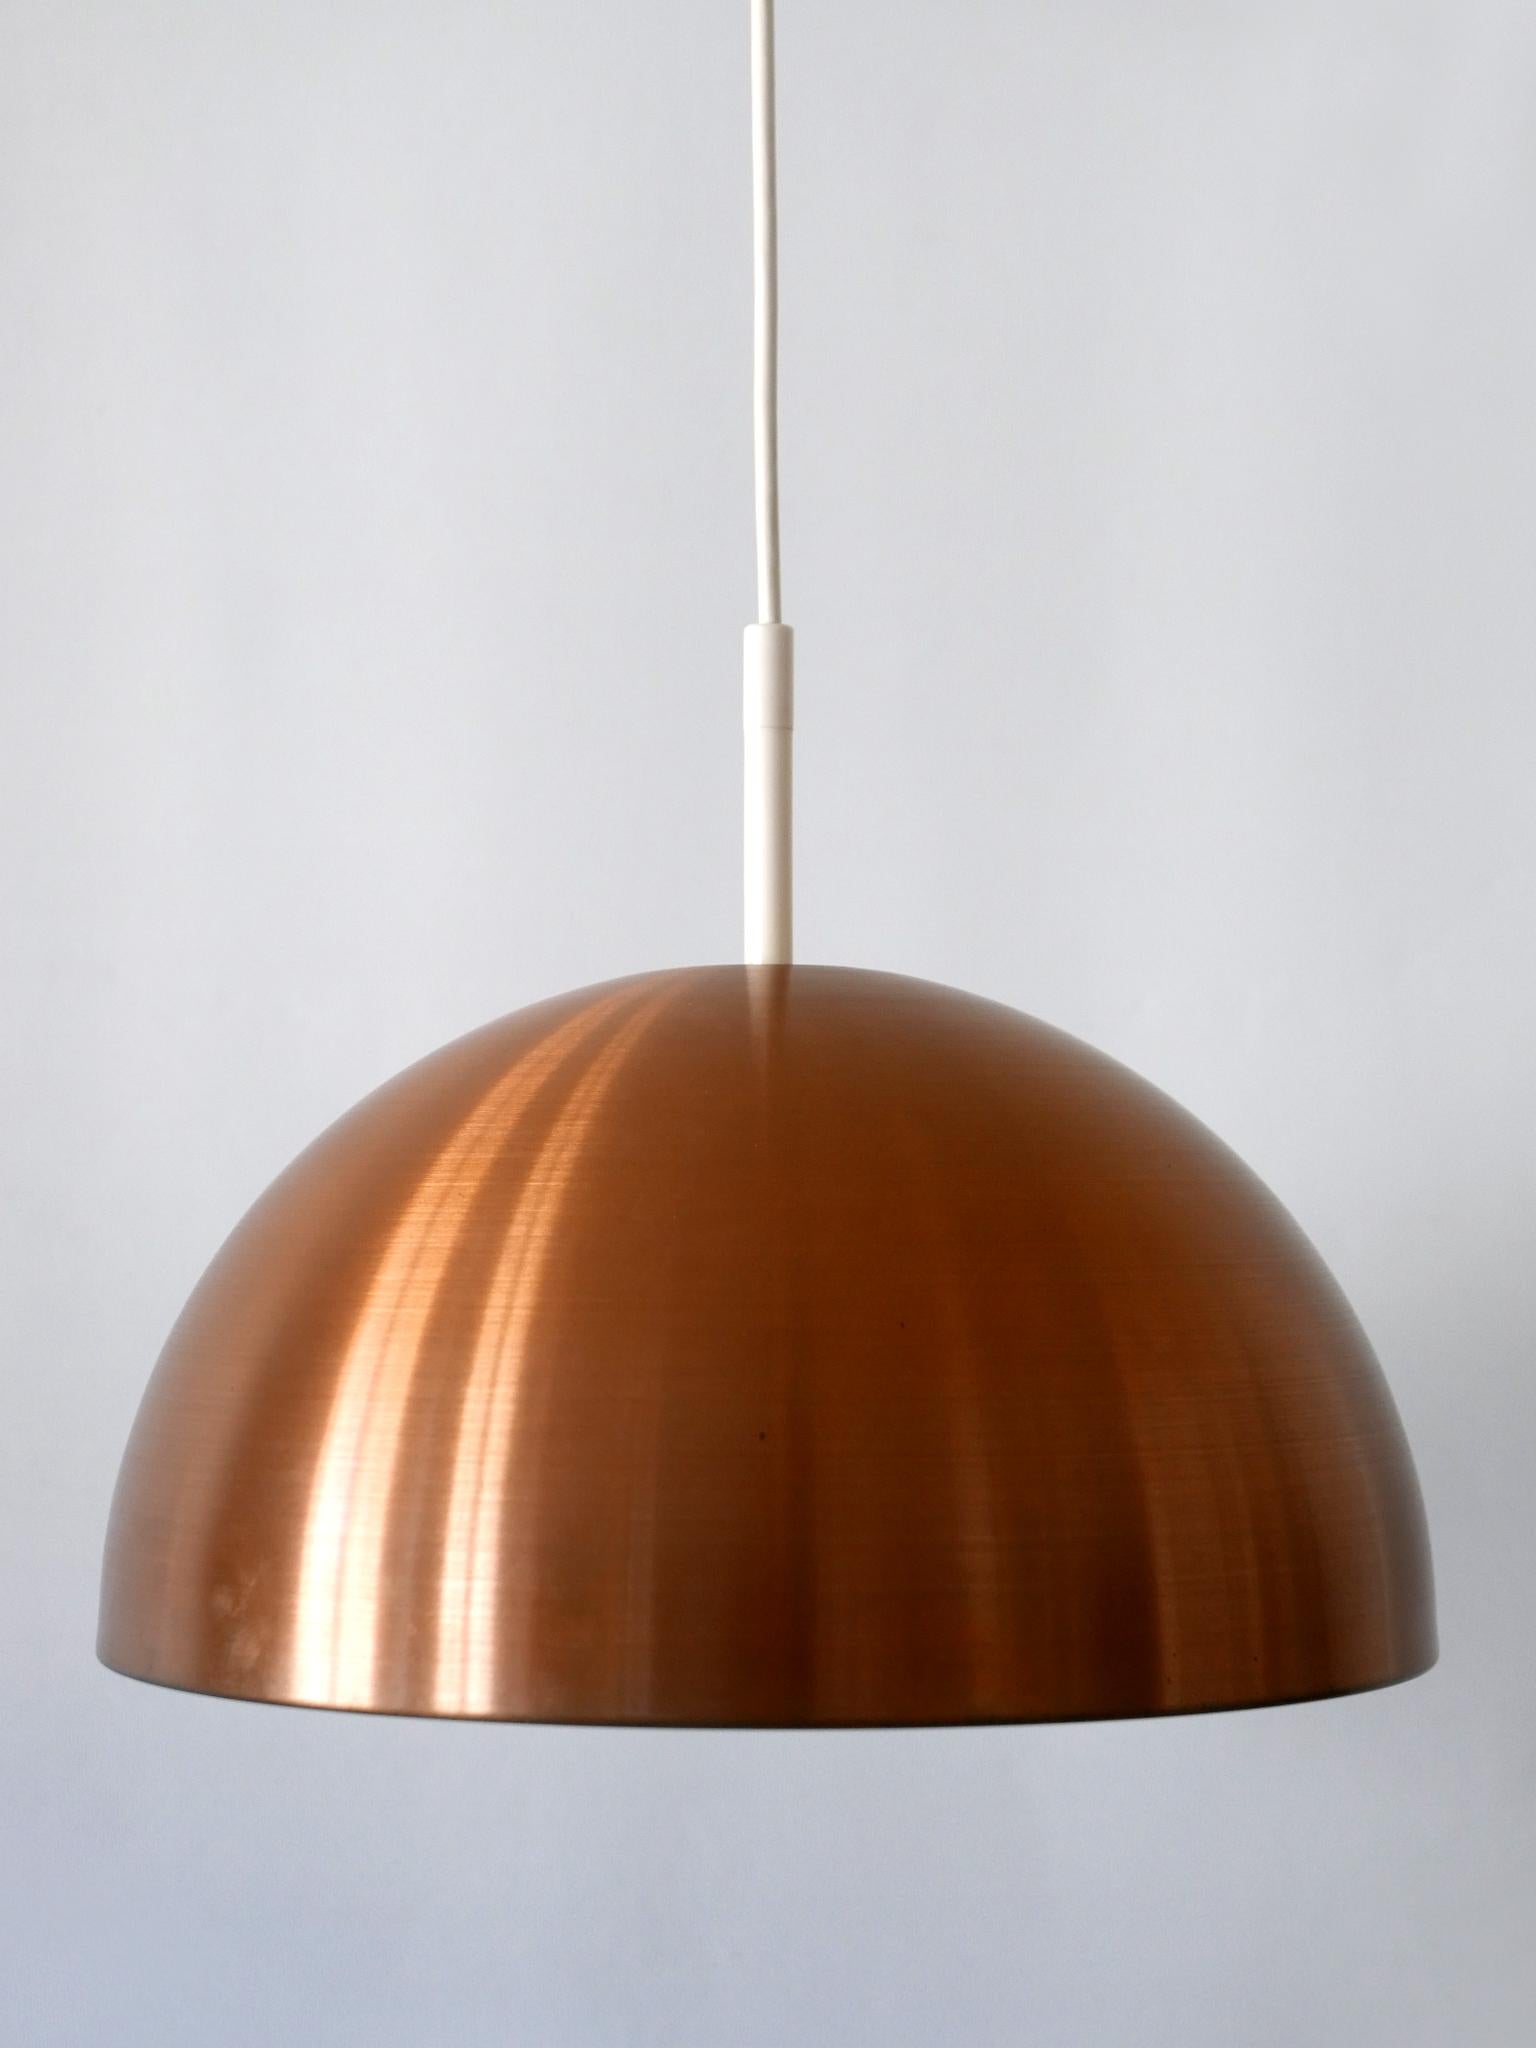 Elegant Mid-Century Modern Copper Pendant Lamp by Staff & Schwarz Germany, 1960s For Sale 6